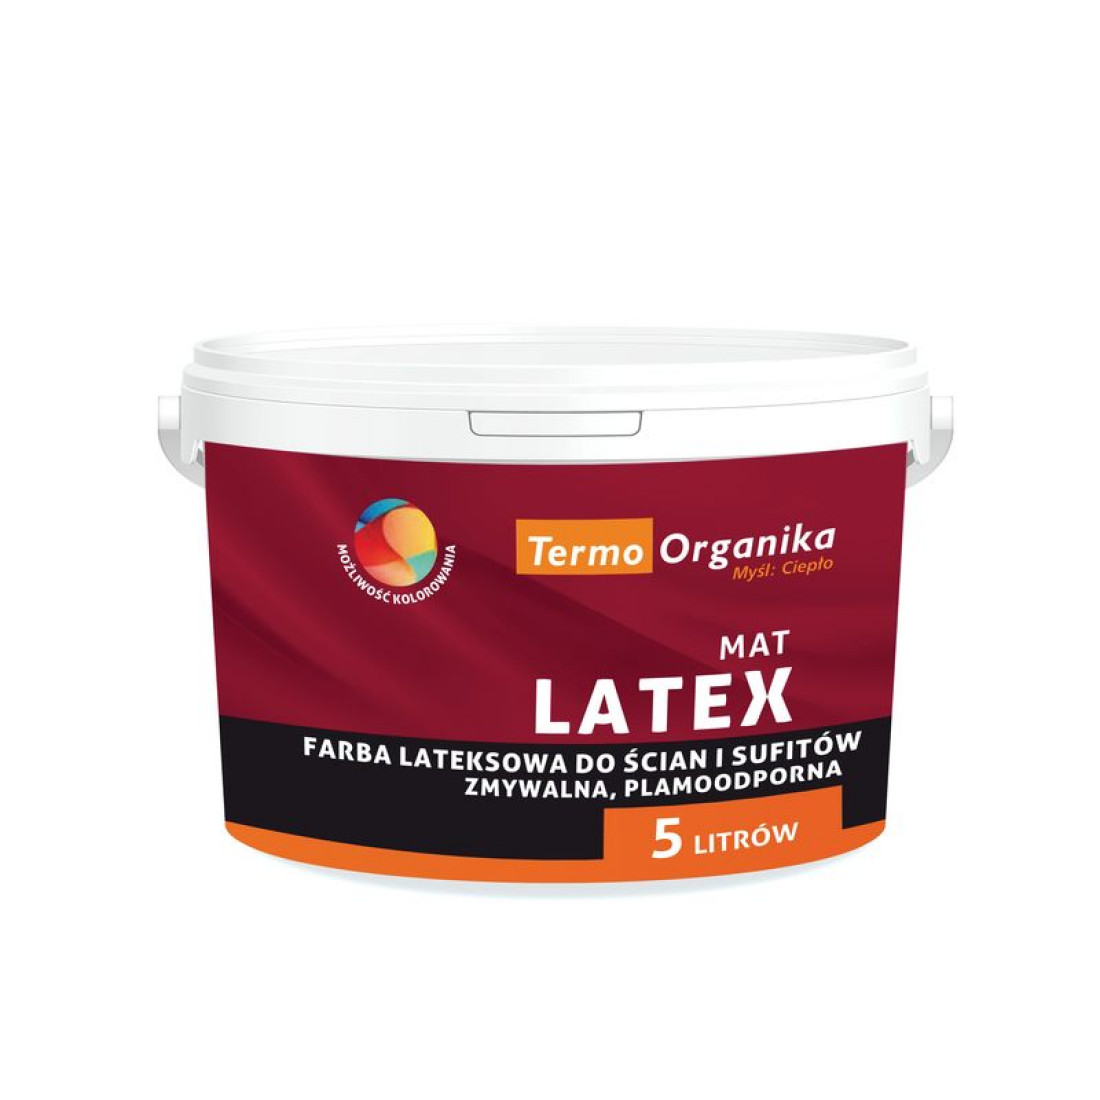 Farba lateksowa LATEX MAT firmy Termo Organika